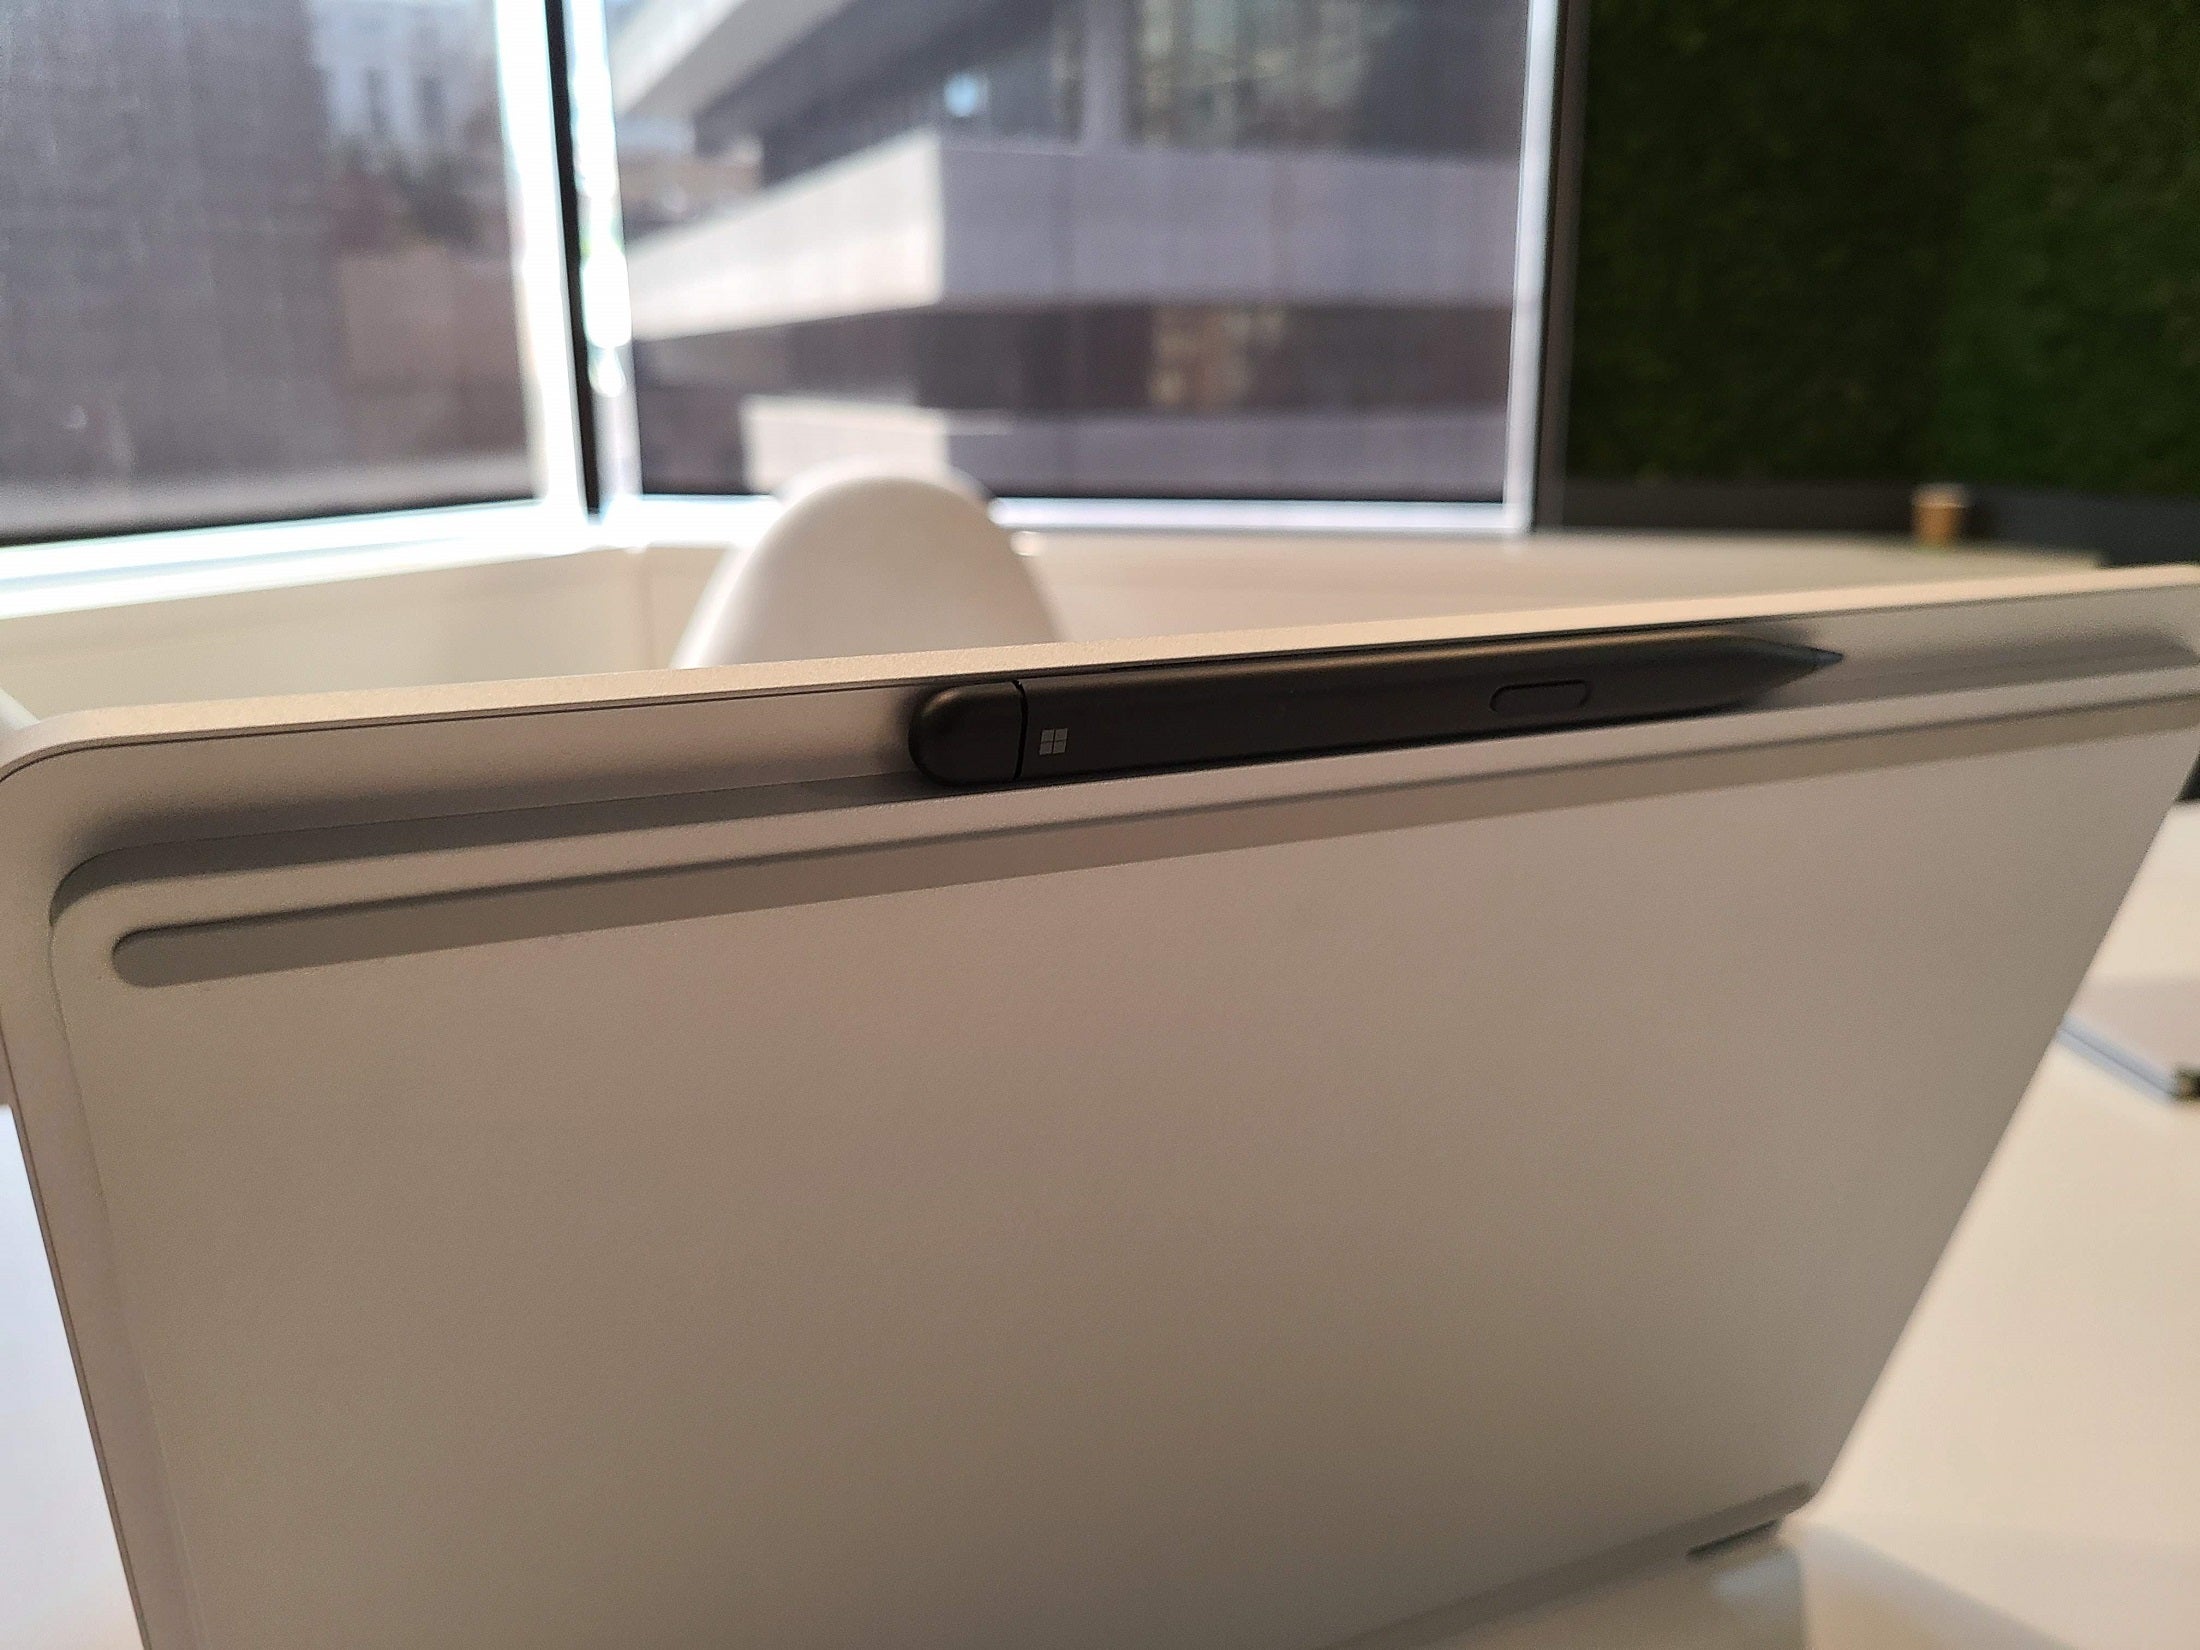 Meet Surface Laptop Studio, the RTX-powered PC that makes Windows